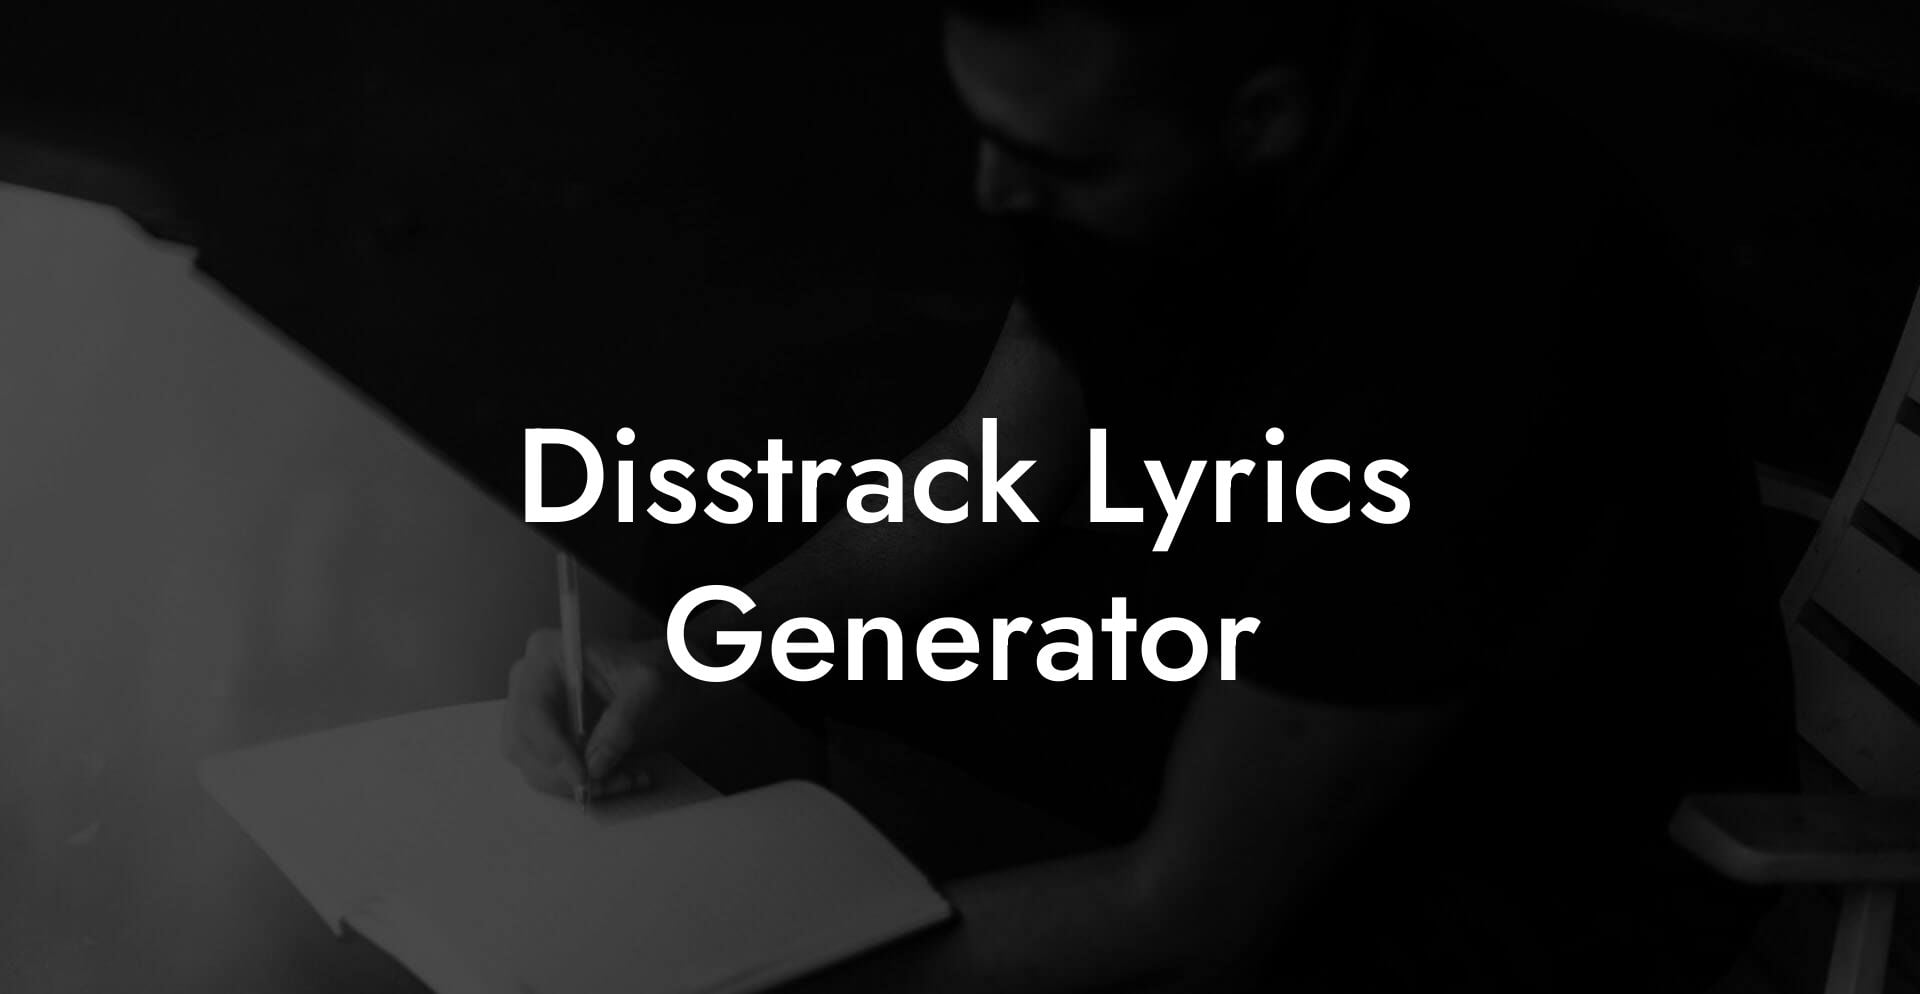 disstrack lyrics generator lyric assistant